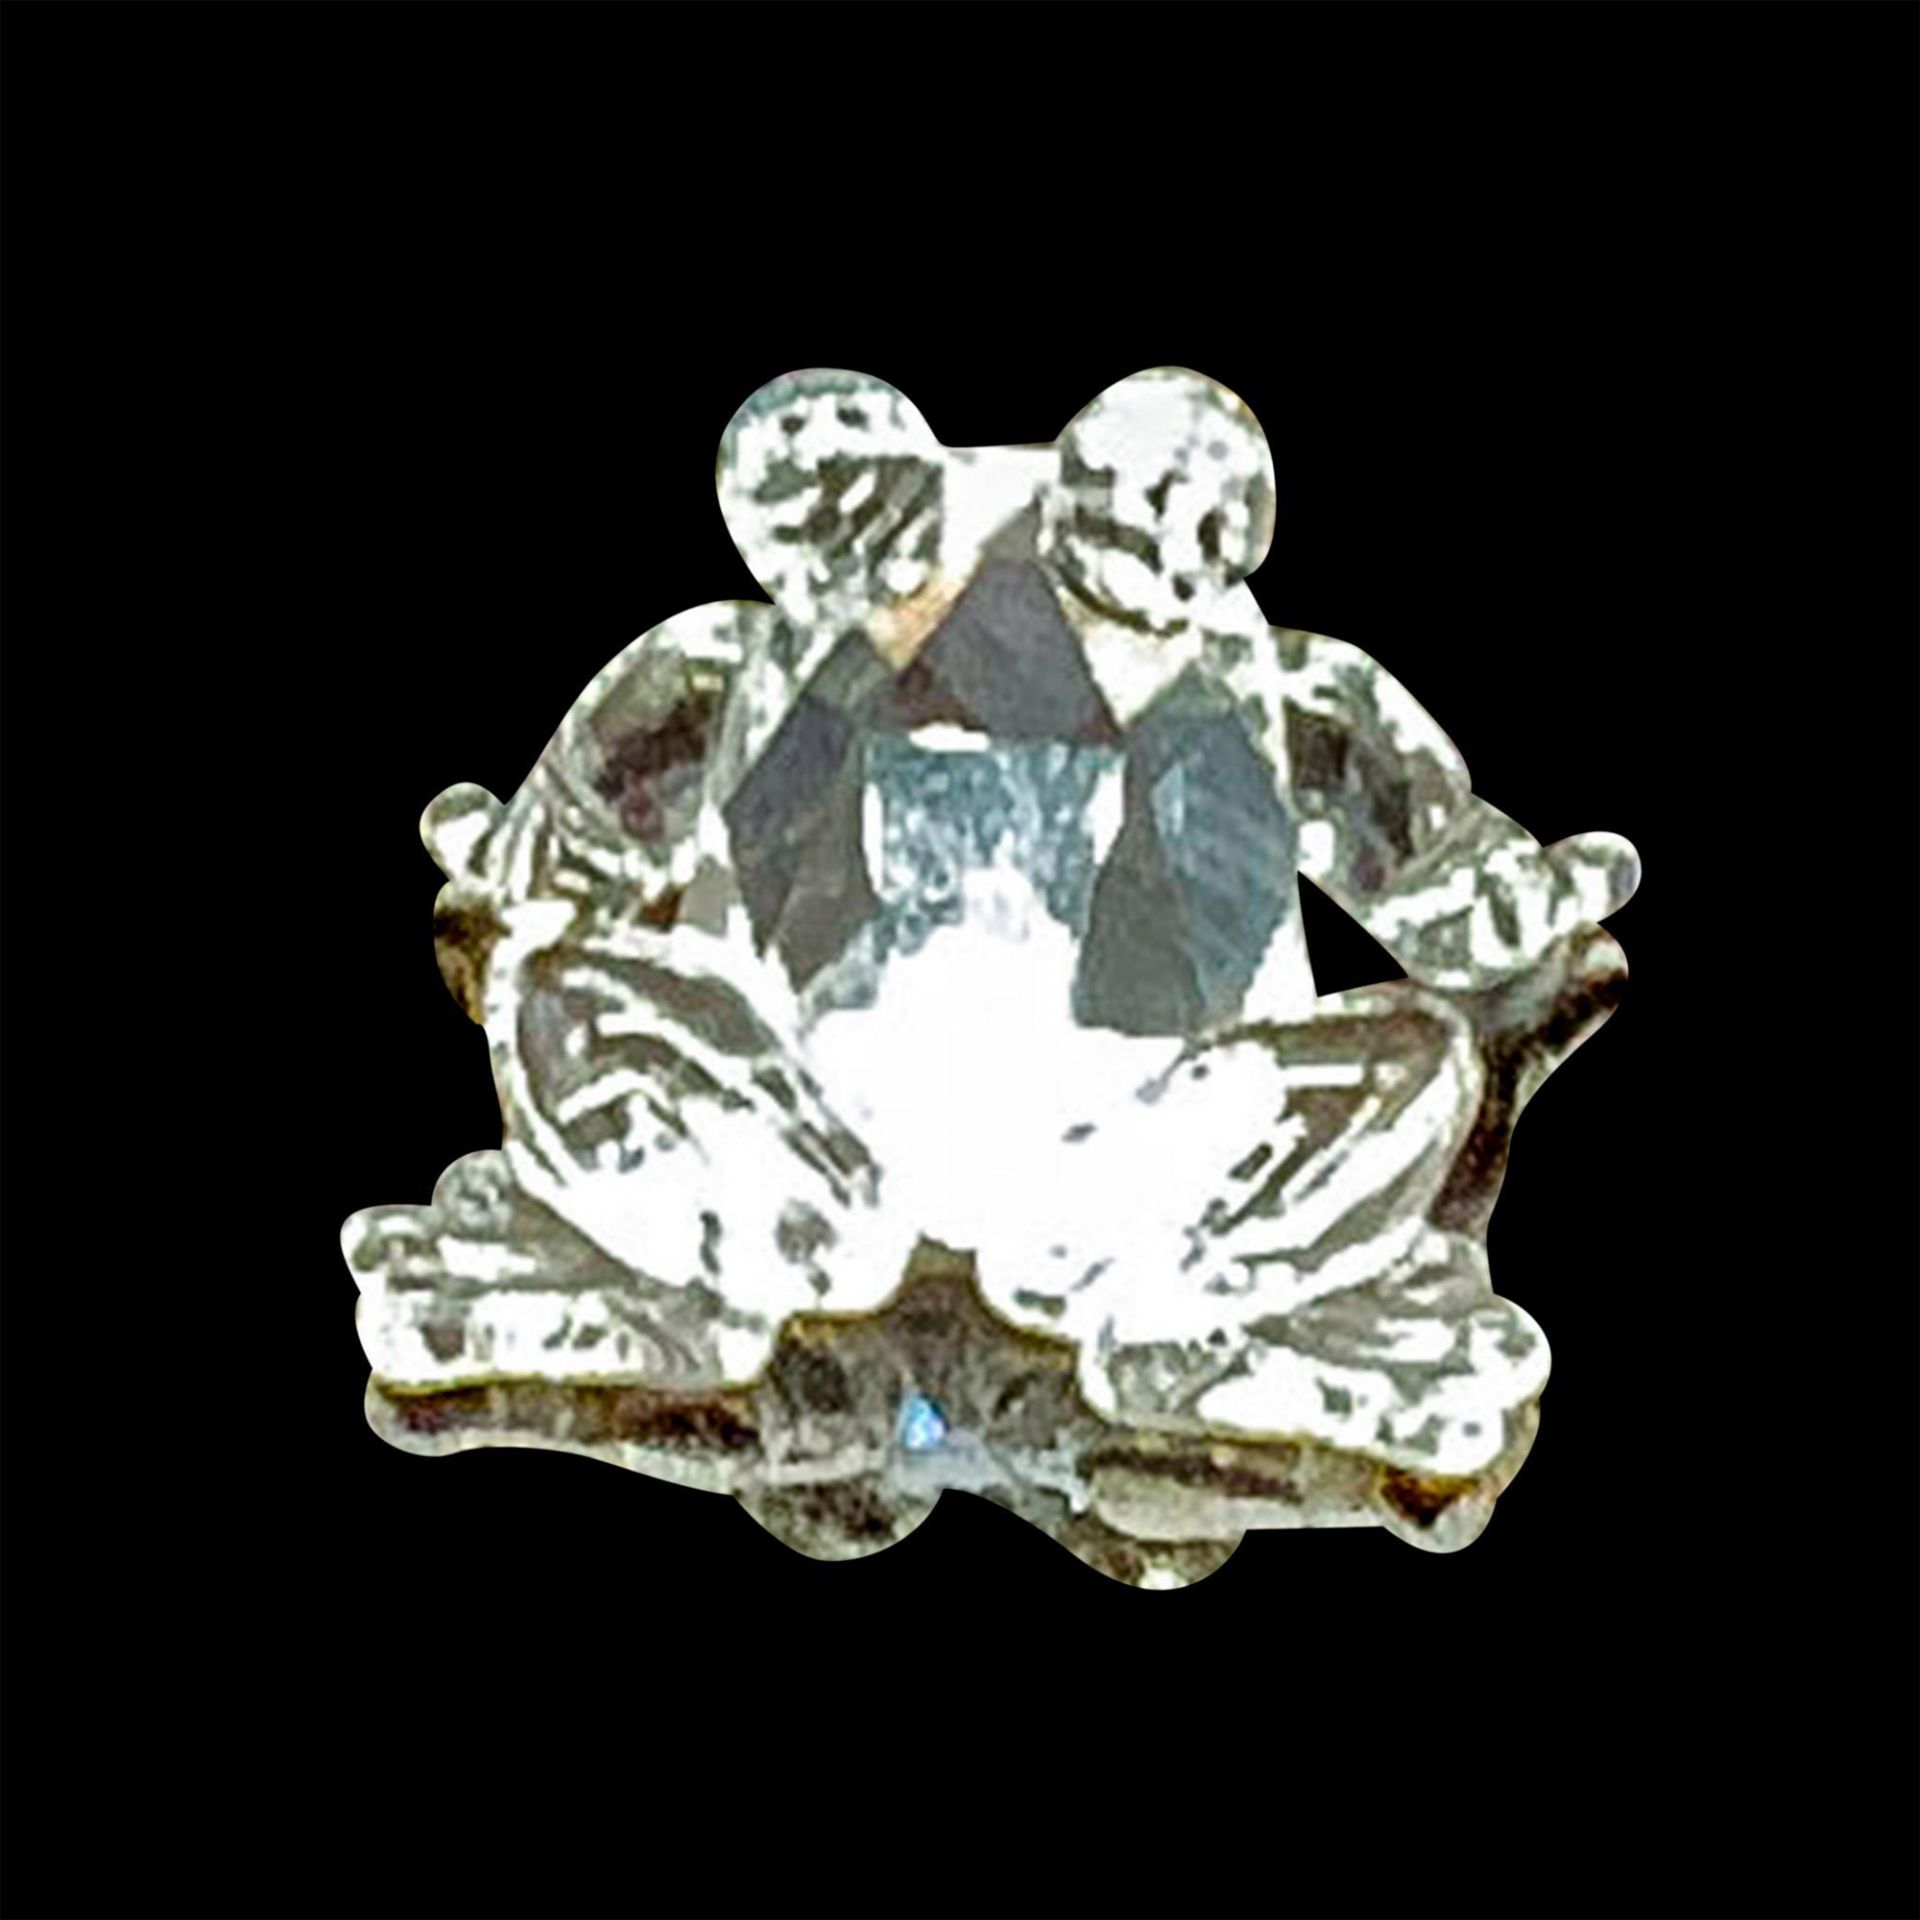 Swarovski Crystal Figurine, Frog Baby 286313 - Image 2 of 4